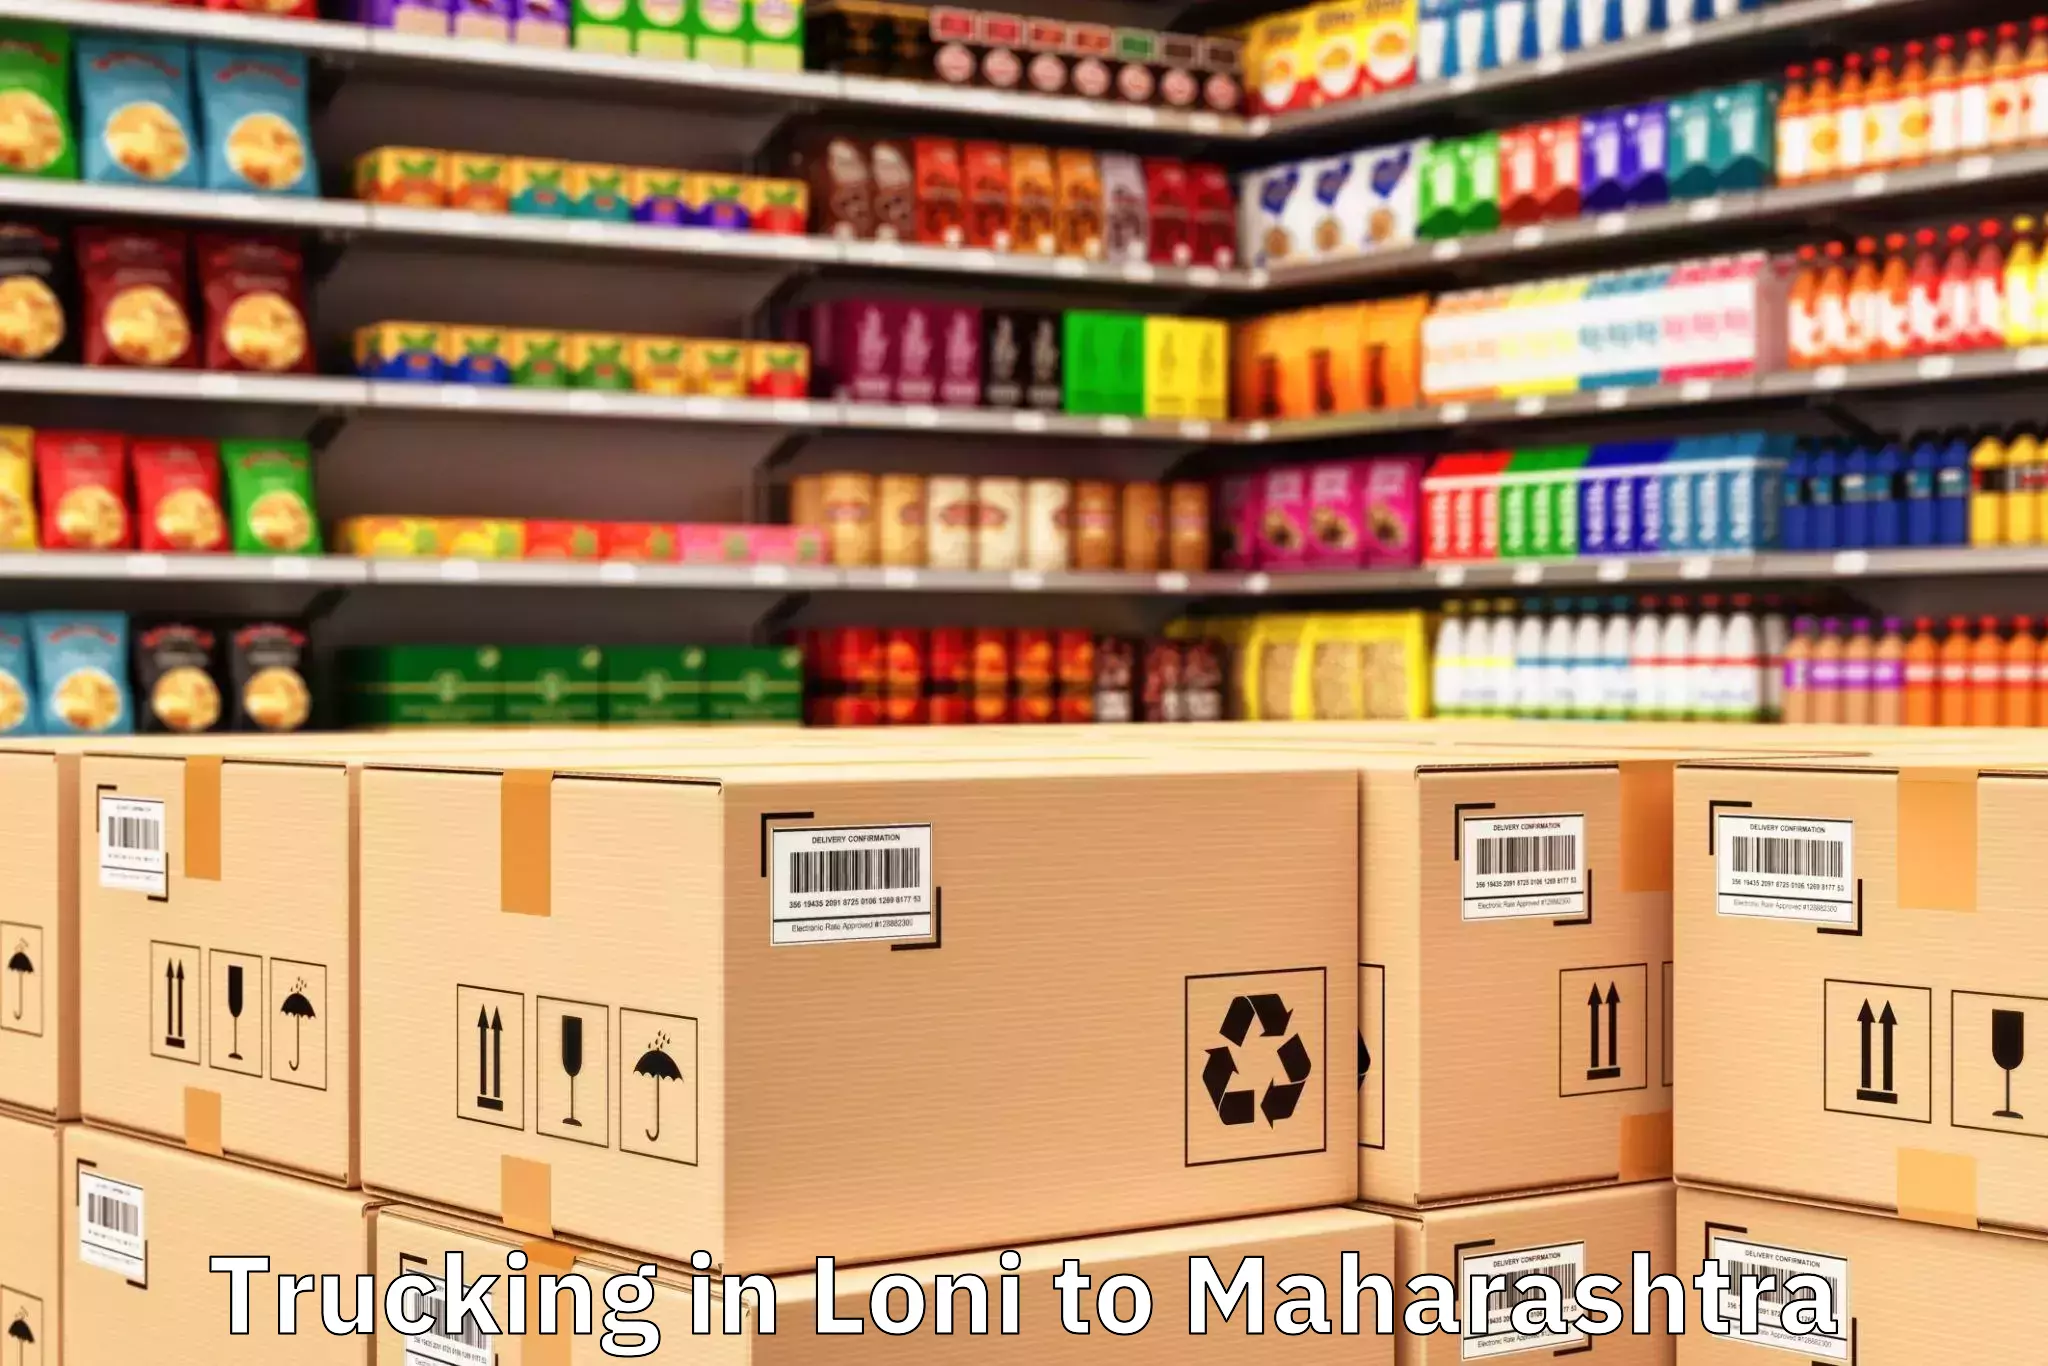 Professional Loni to Maharashtra Trucking